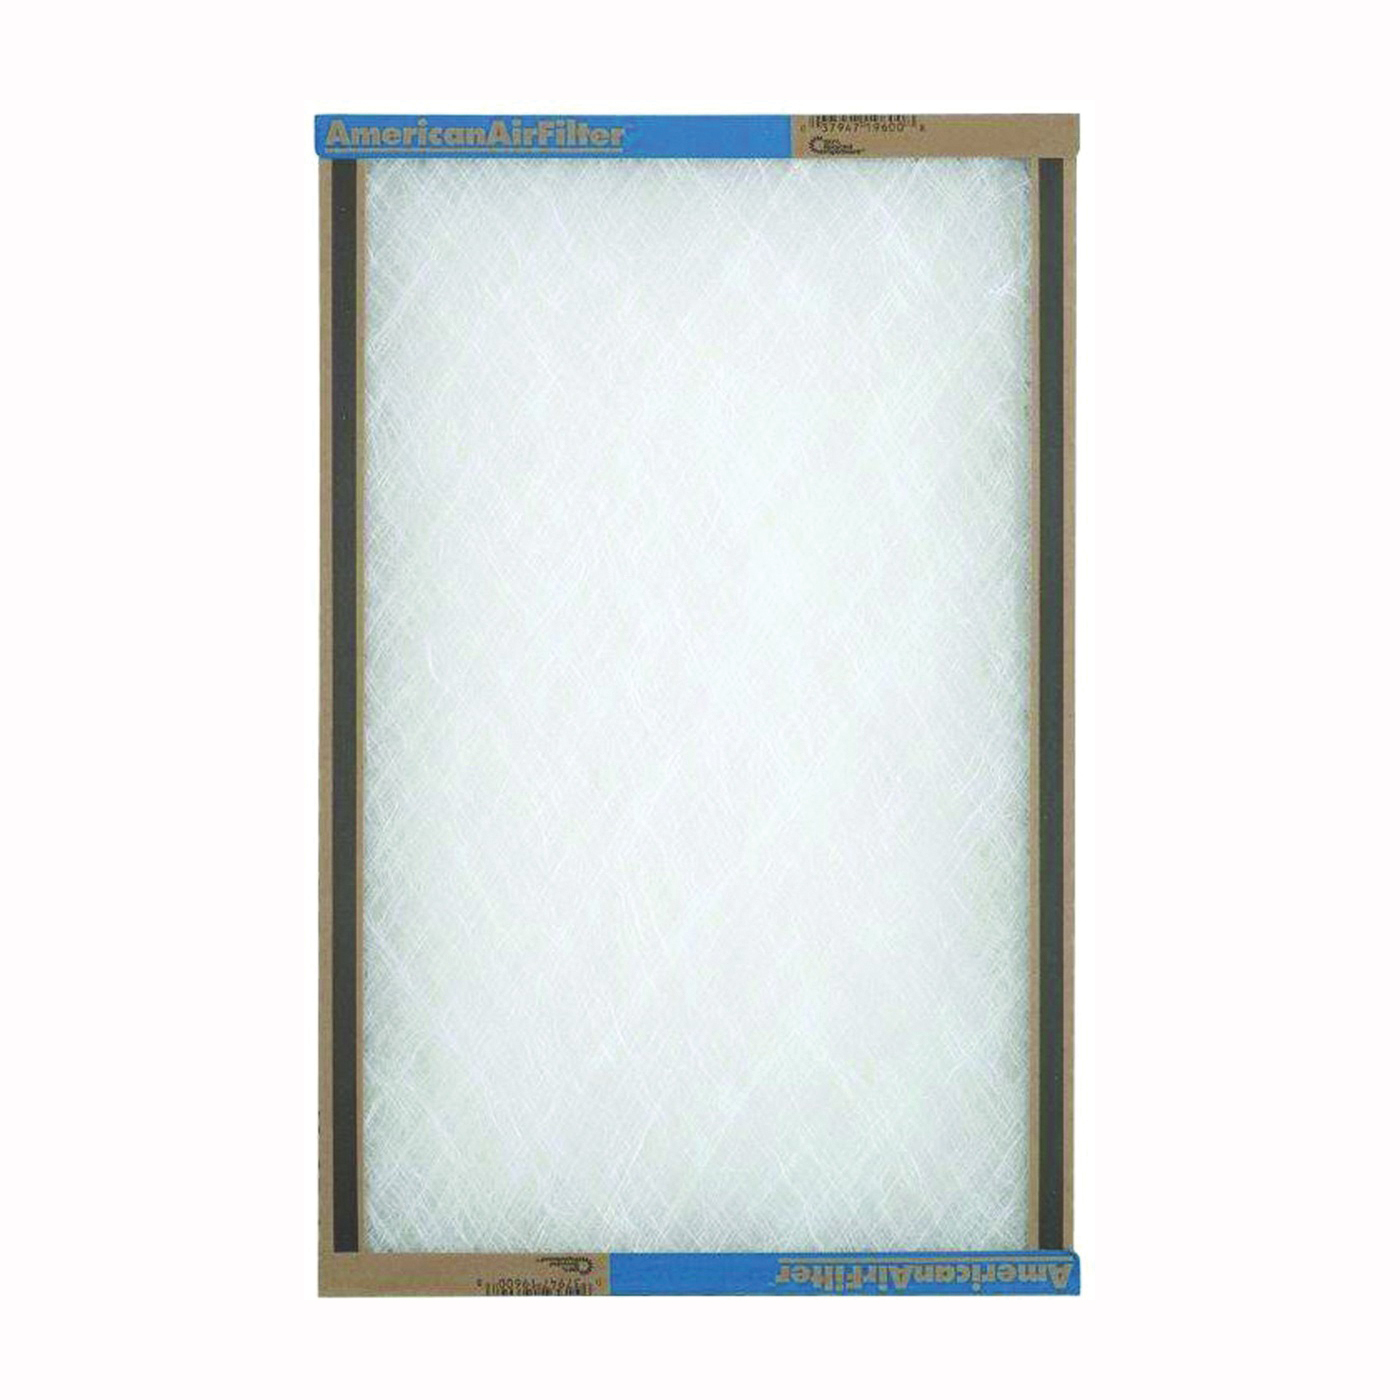 220-500-051 Panel Air Filter, 20 x 16 x 1, Chipboard Frame